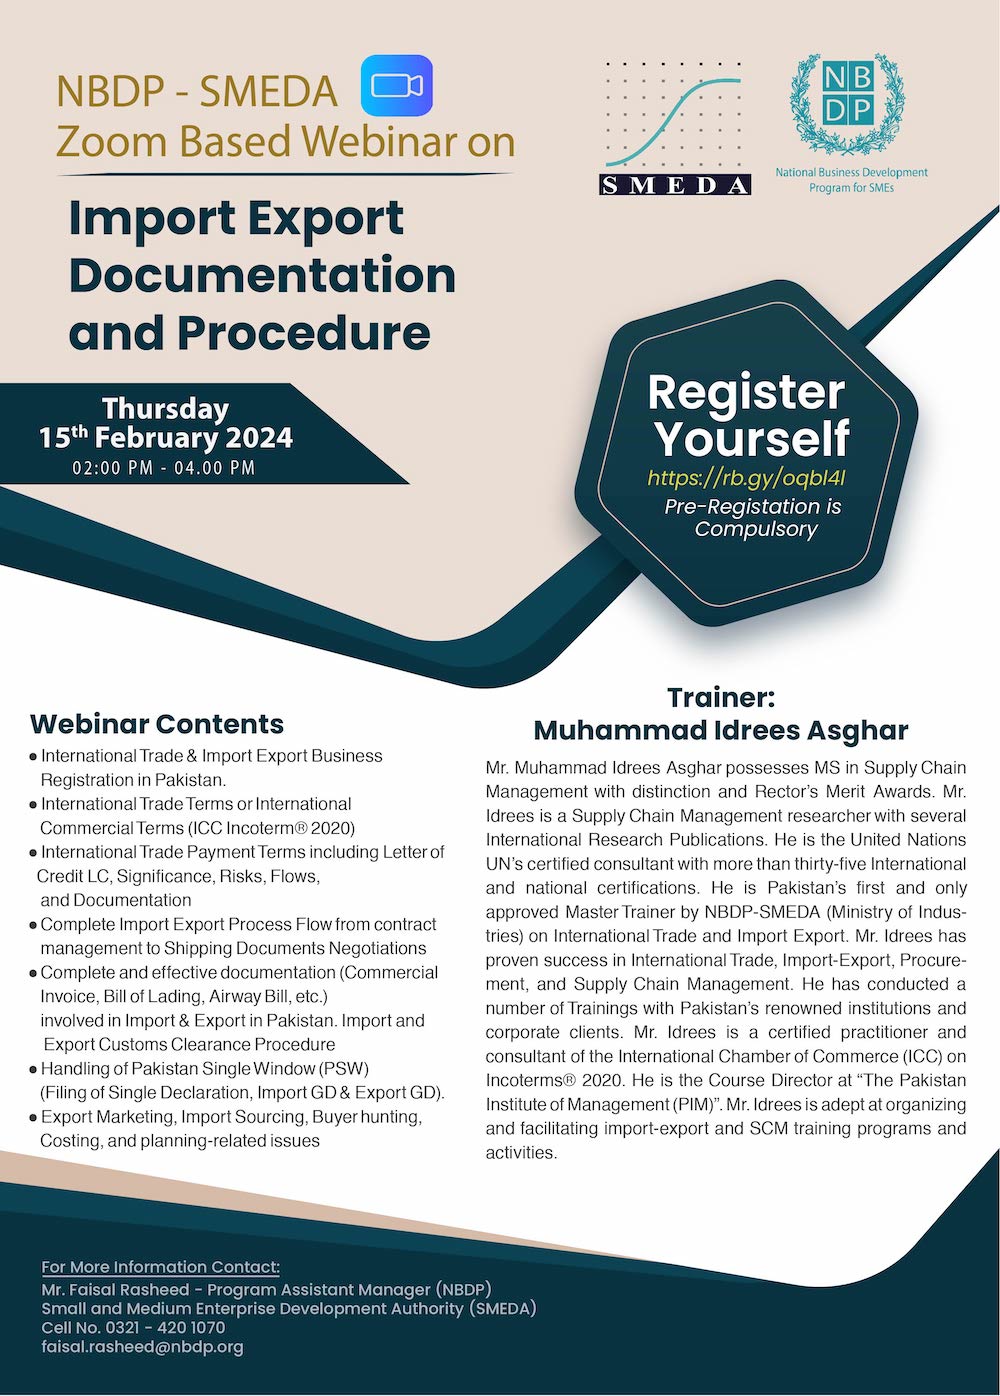 Import Export Documentation and Procedure 15 2 2024